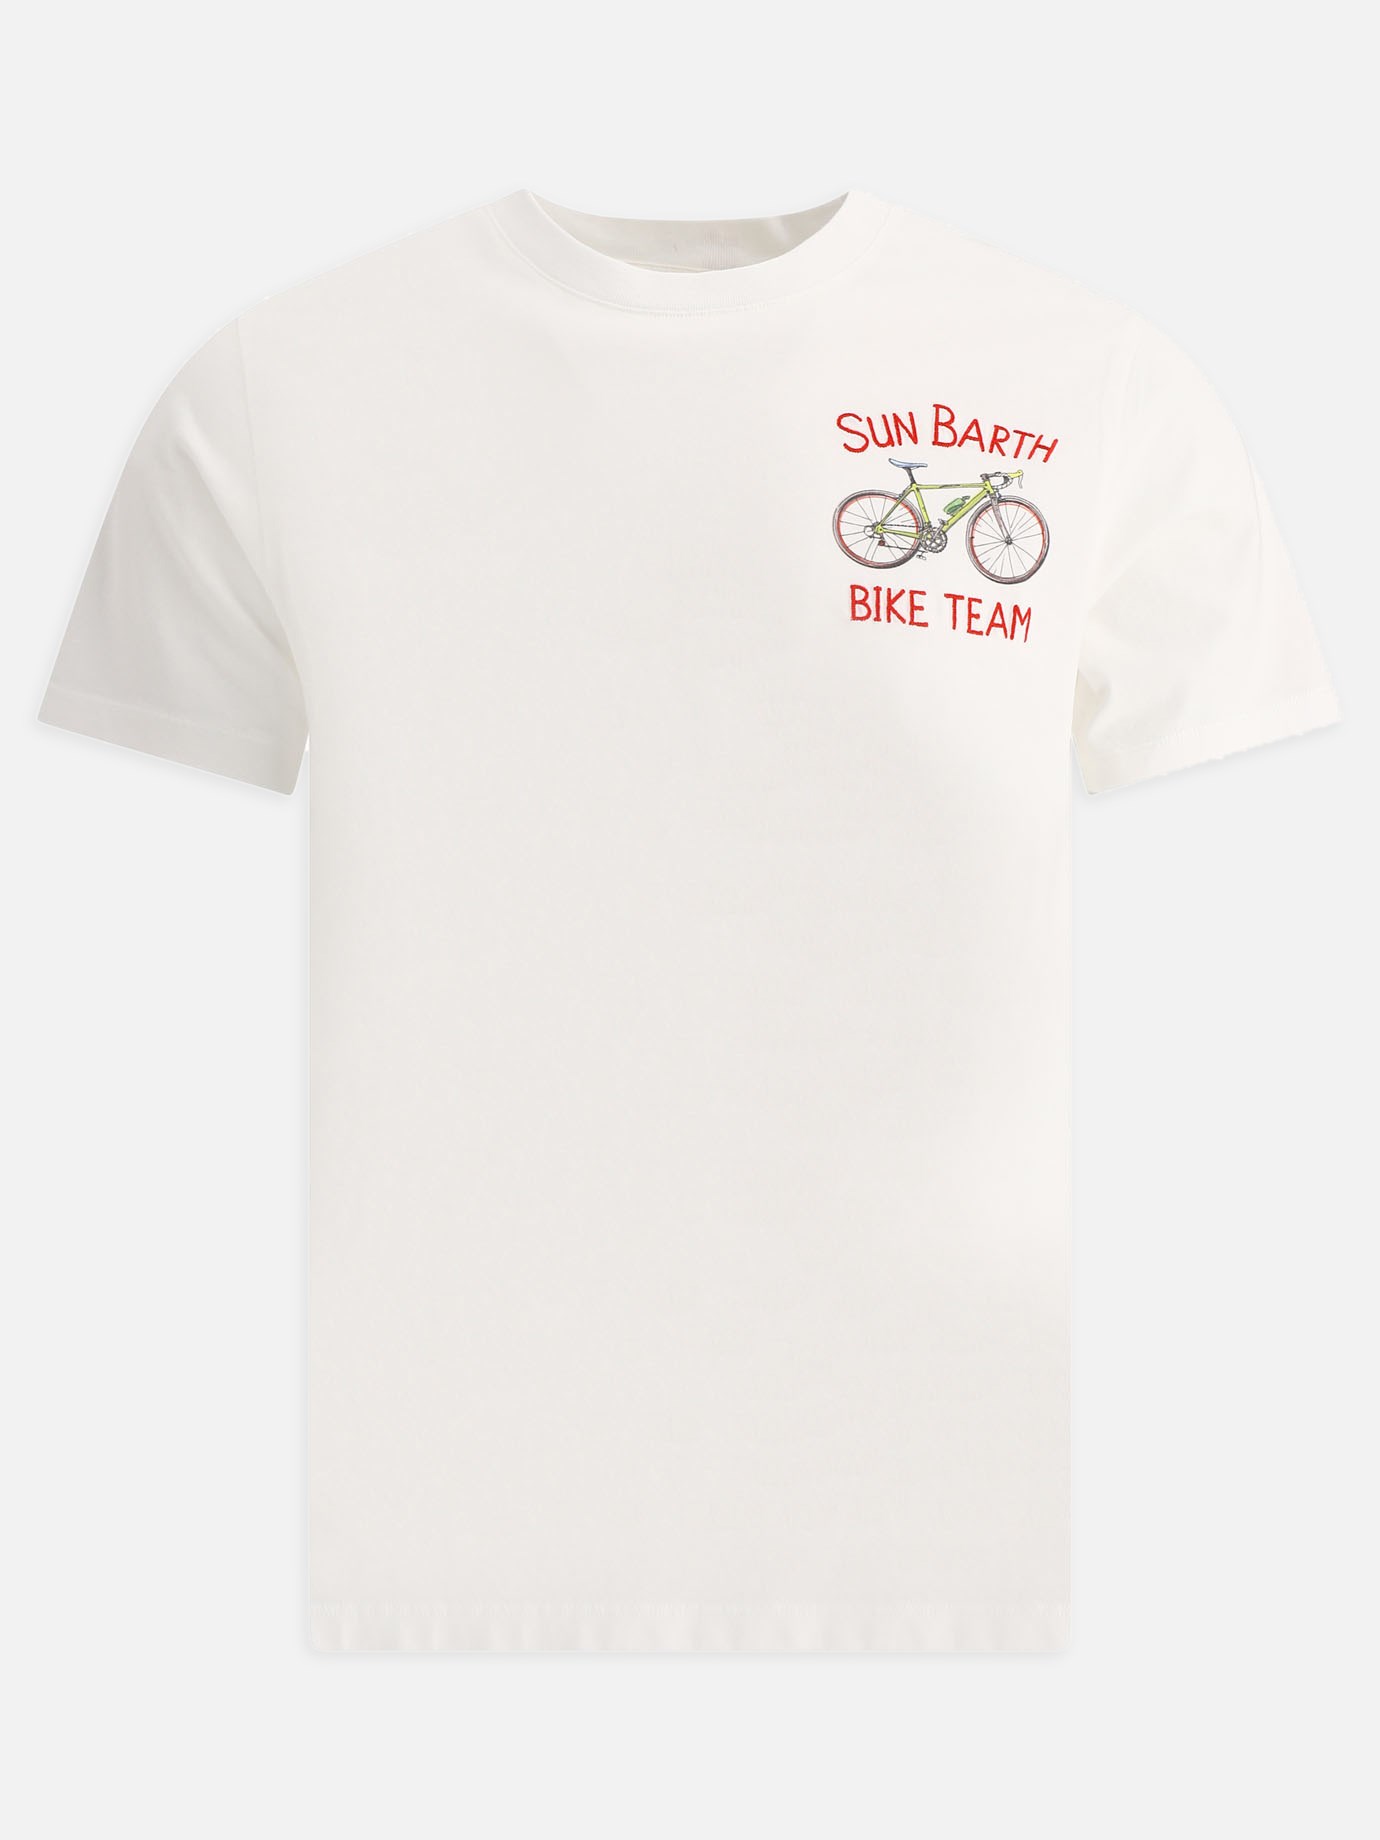  Bike Team  t-shirtby MC2 Saint Barth - 1